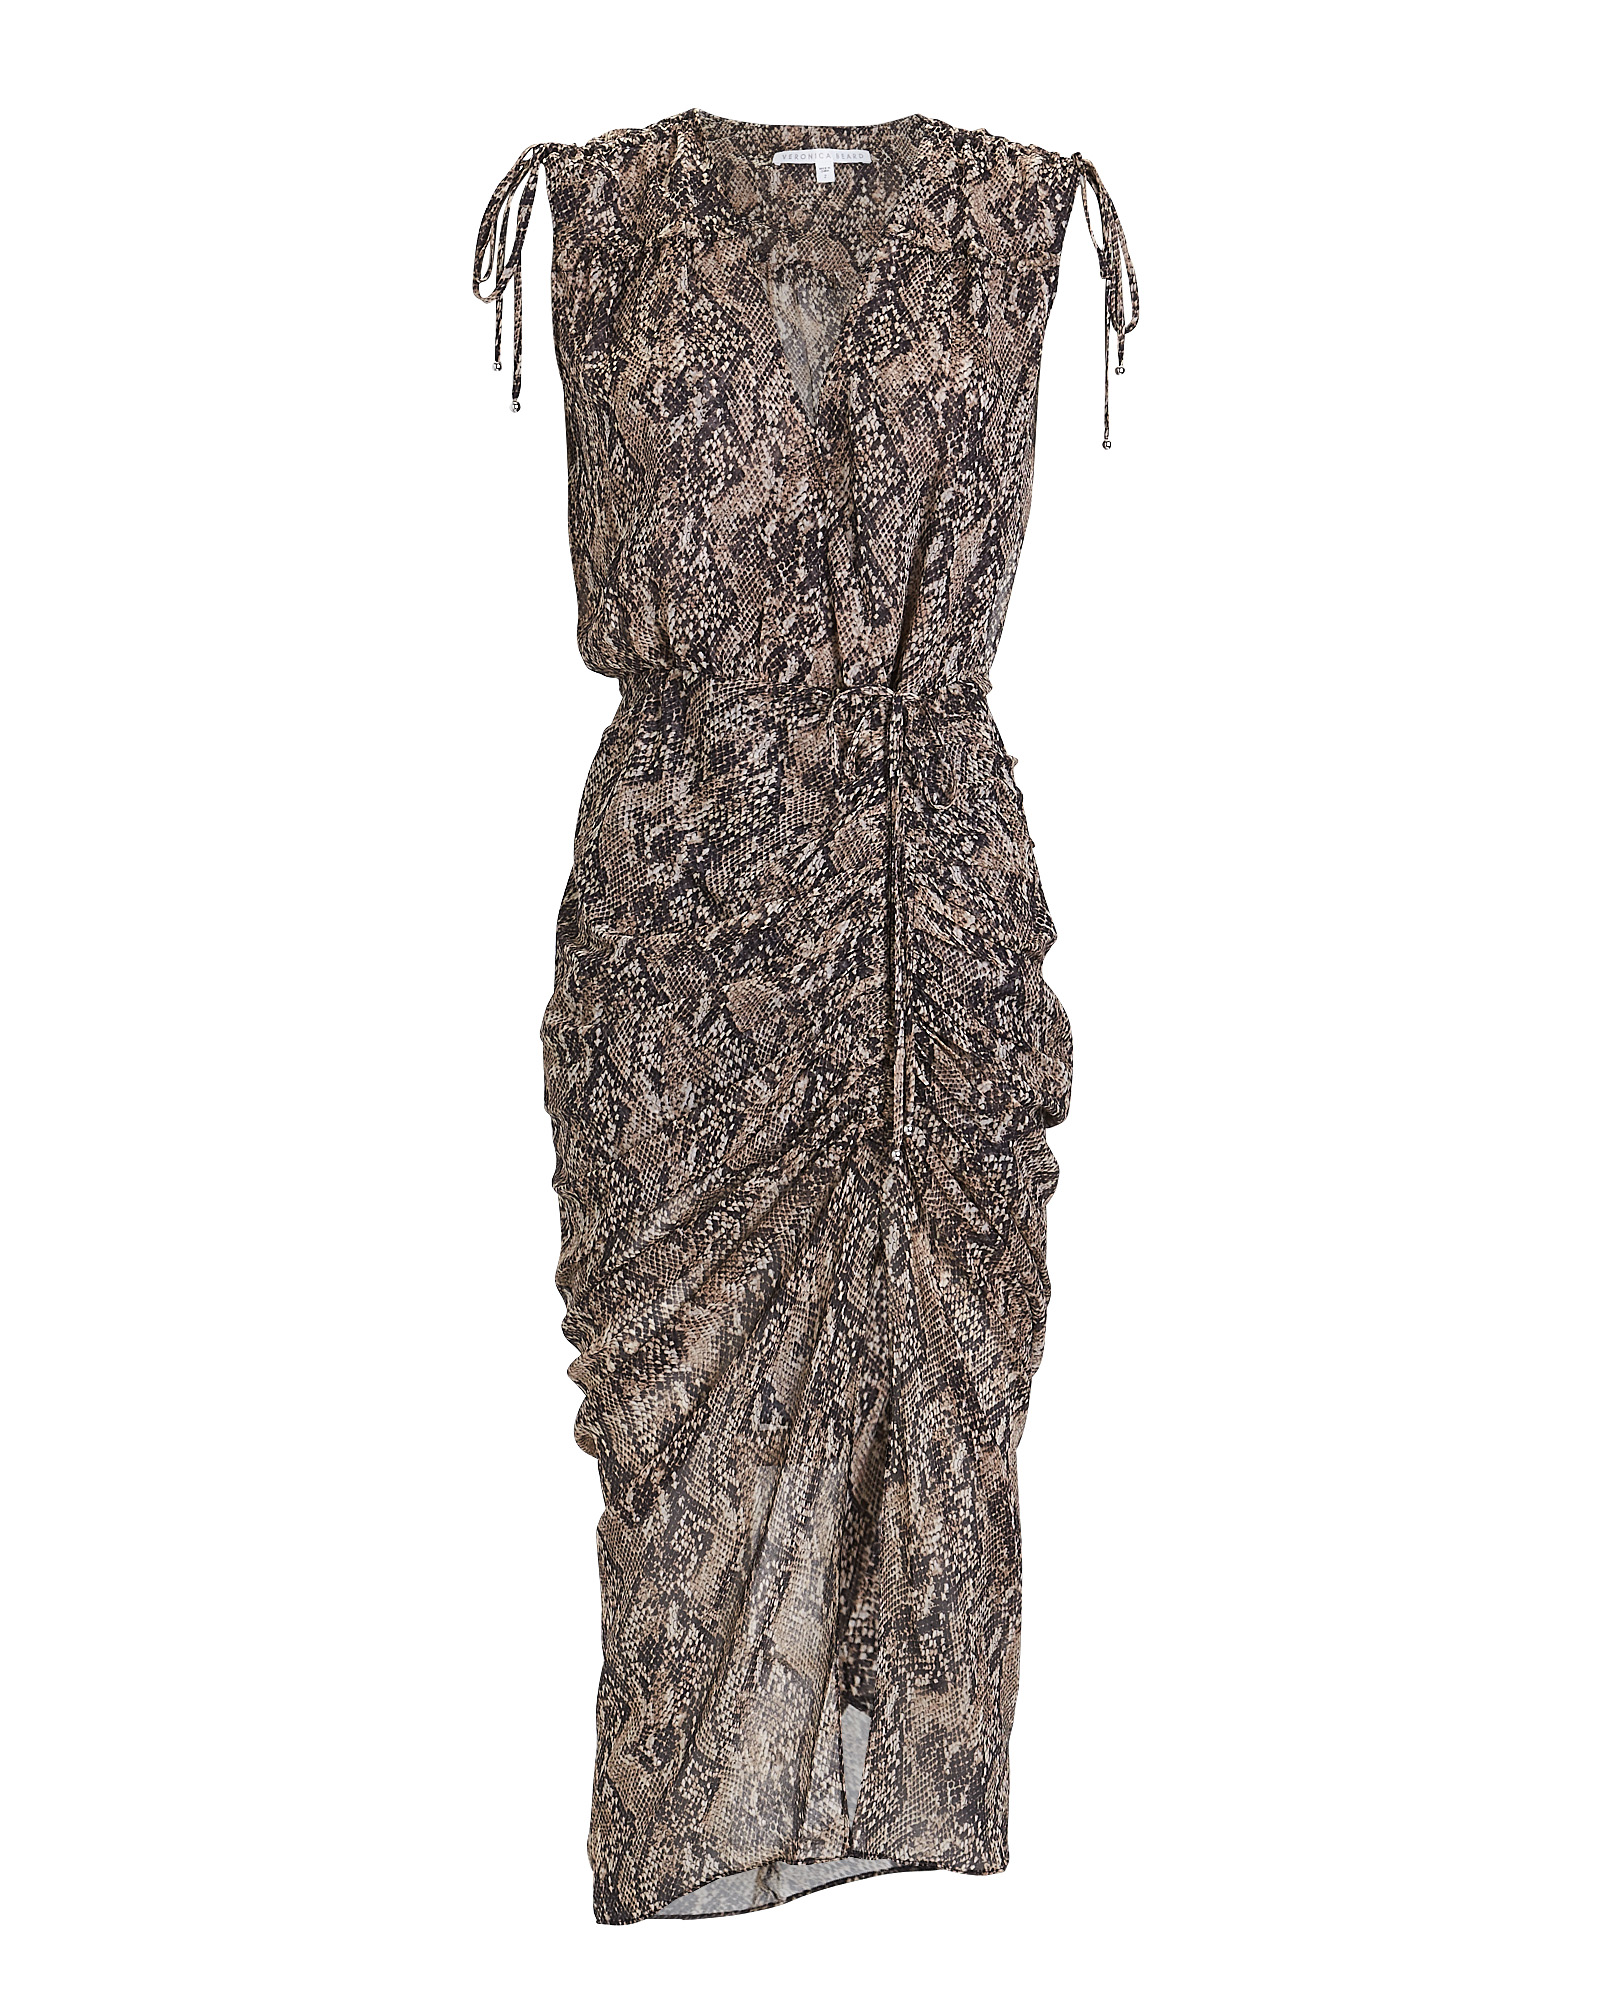 Veronica Beard | Teagan Python-Printed Dress | INTERMIX®